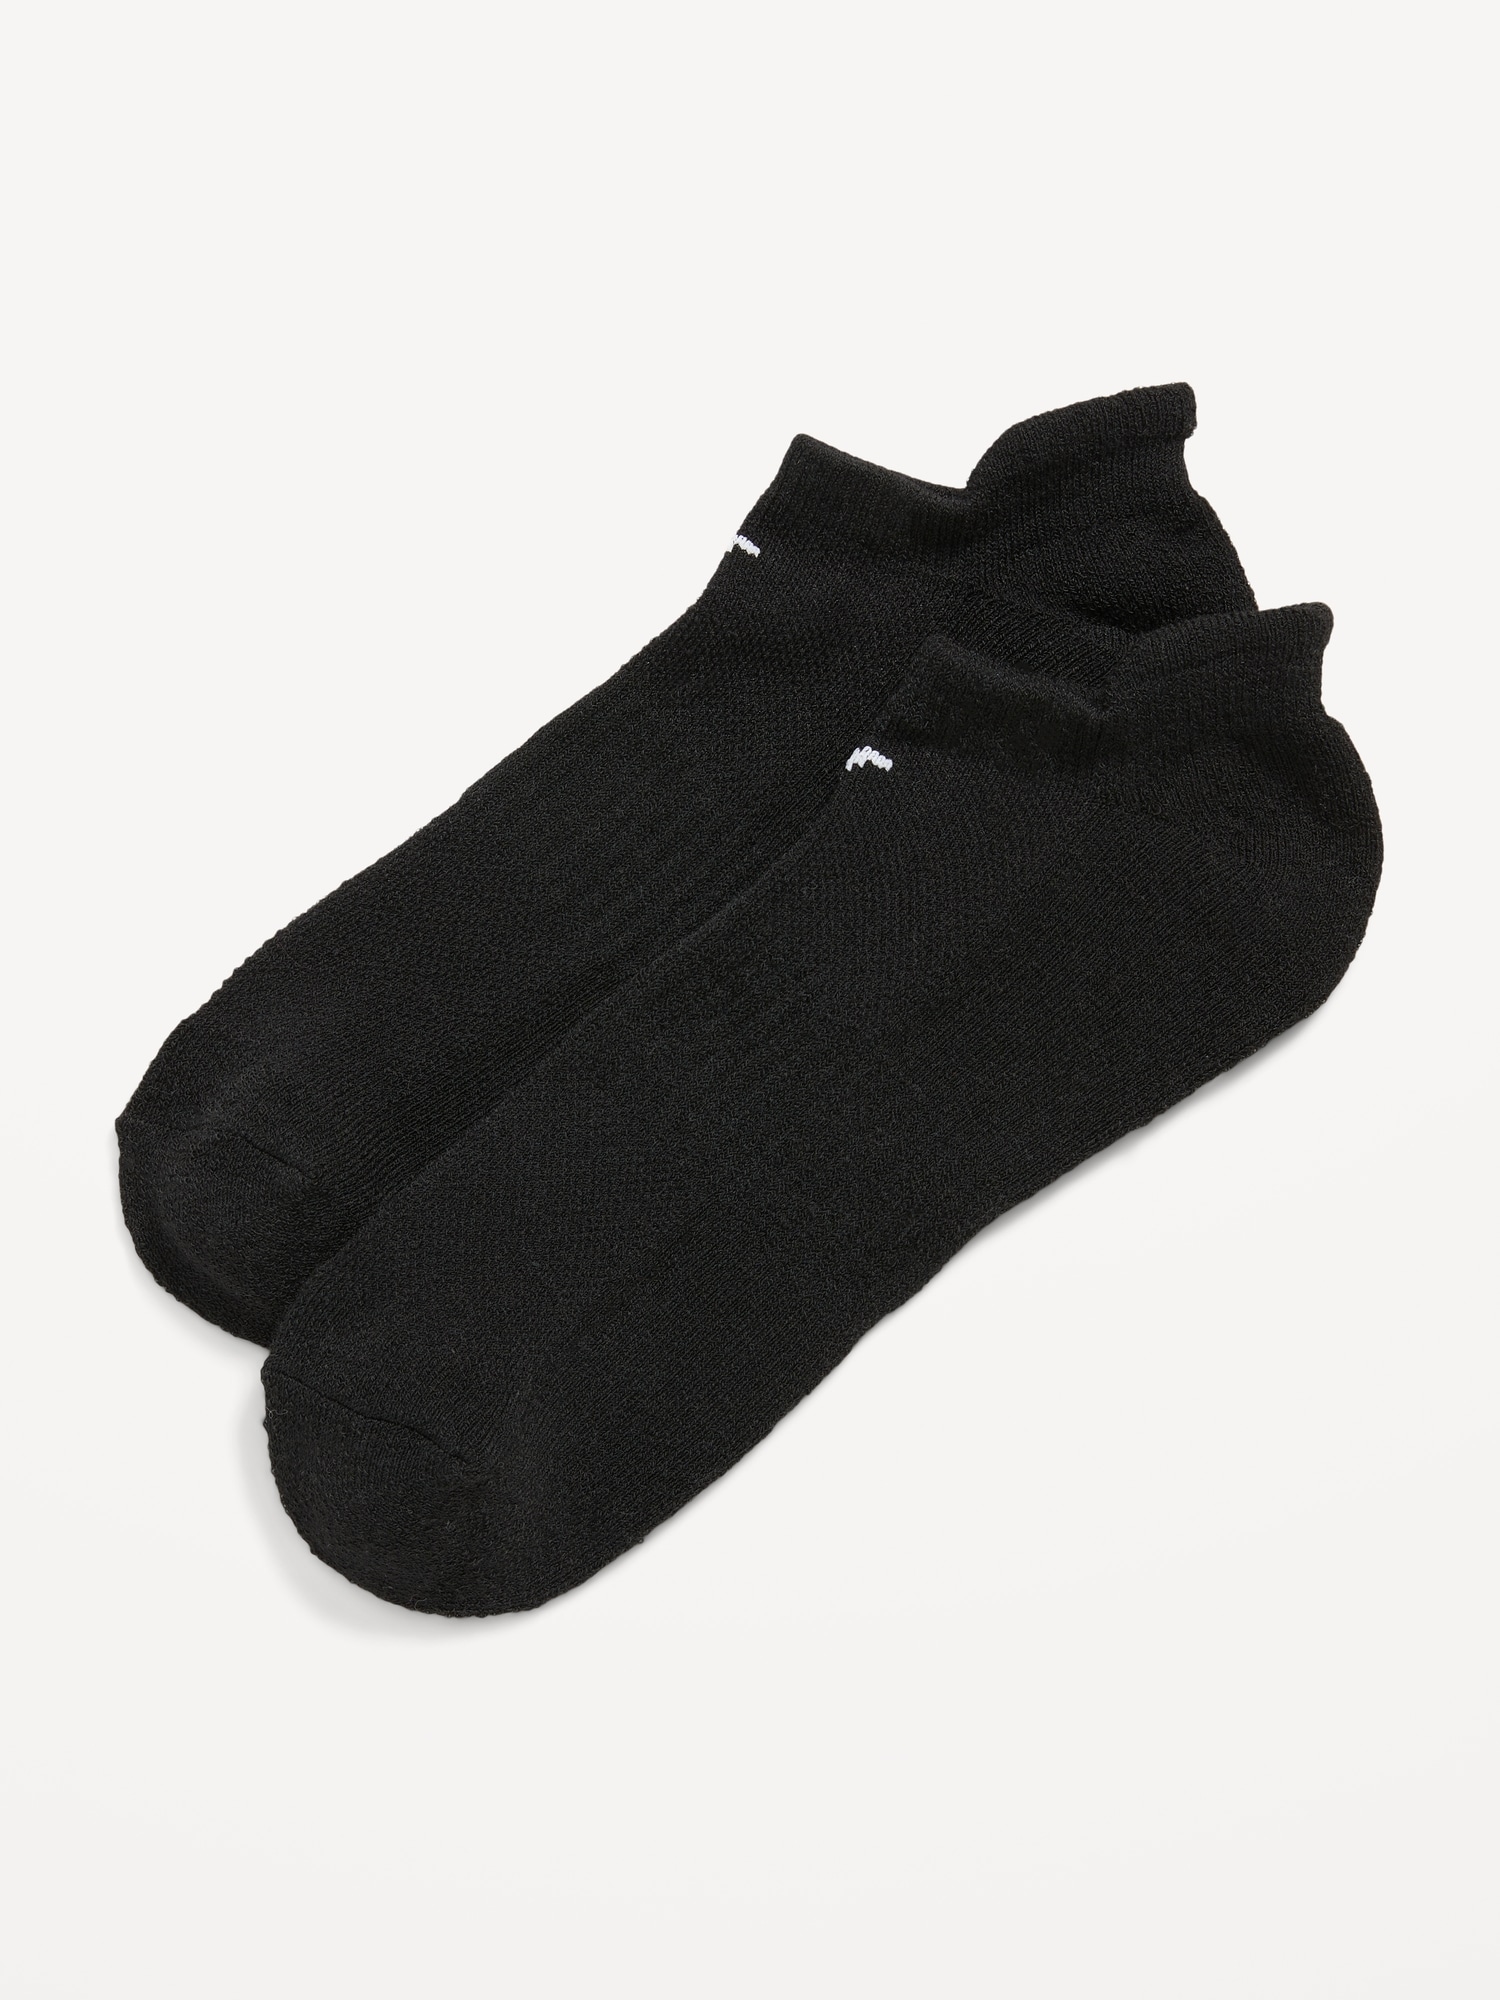 Old Navy Athletic Ankle Socks black. 1